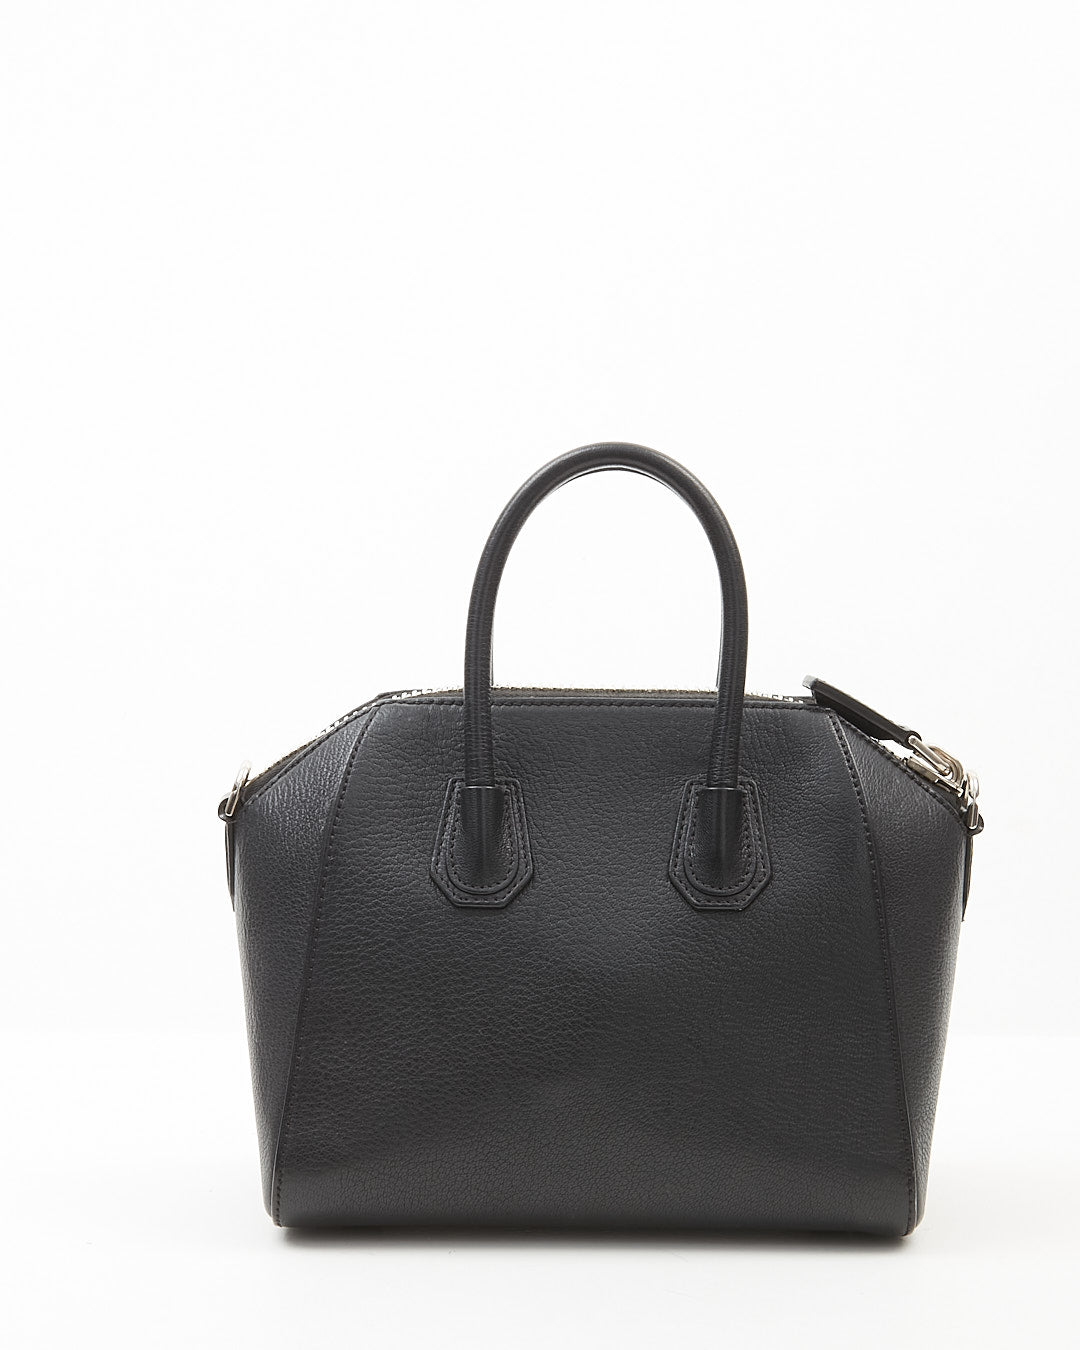 Givenchy Black Sugar Grained Leather Mini Antigona Bag